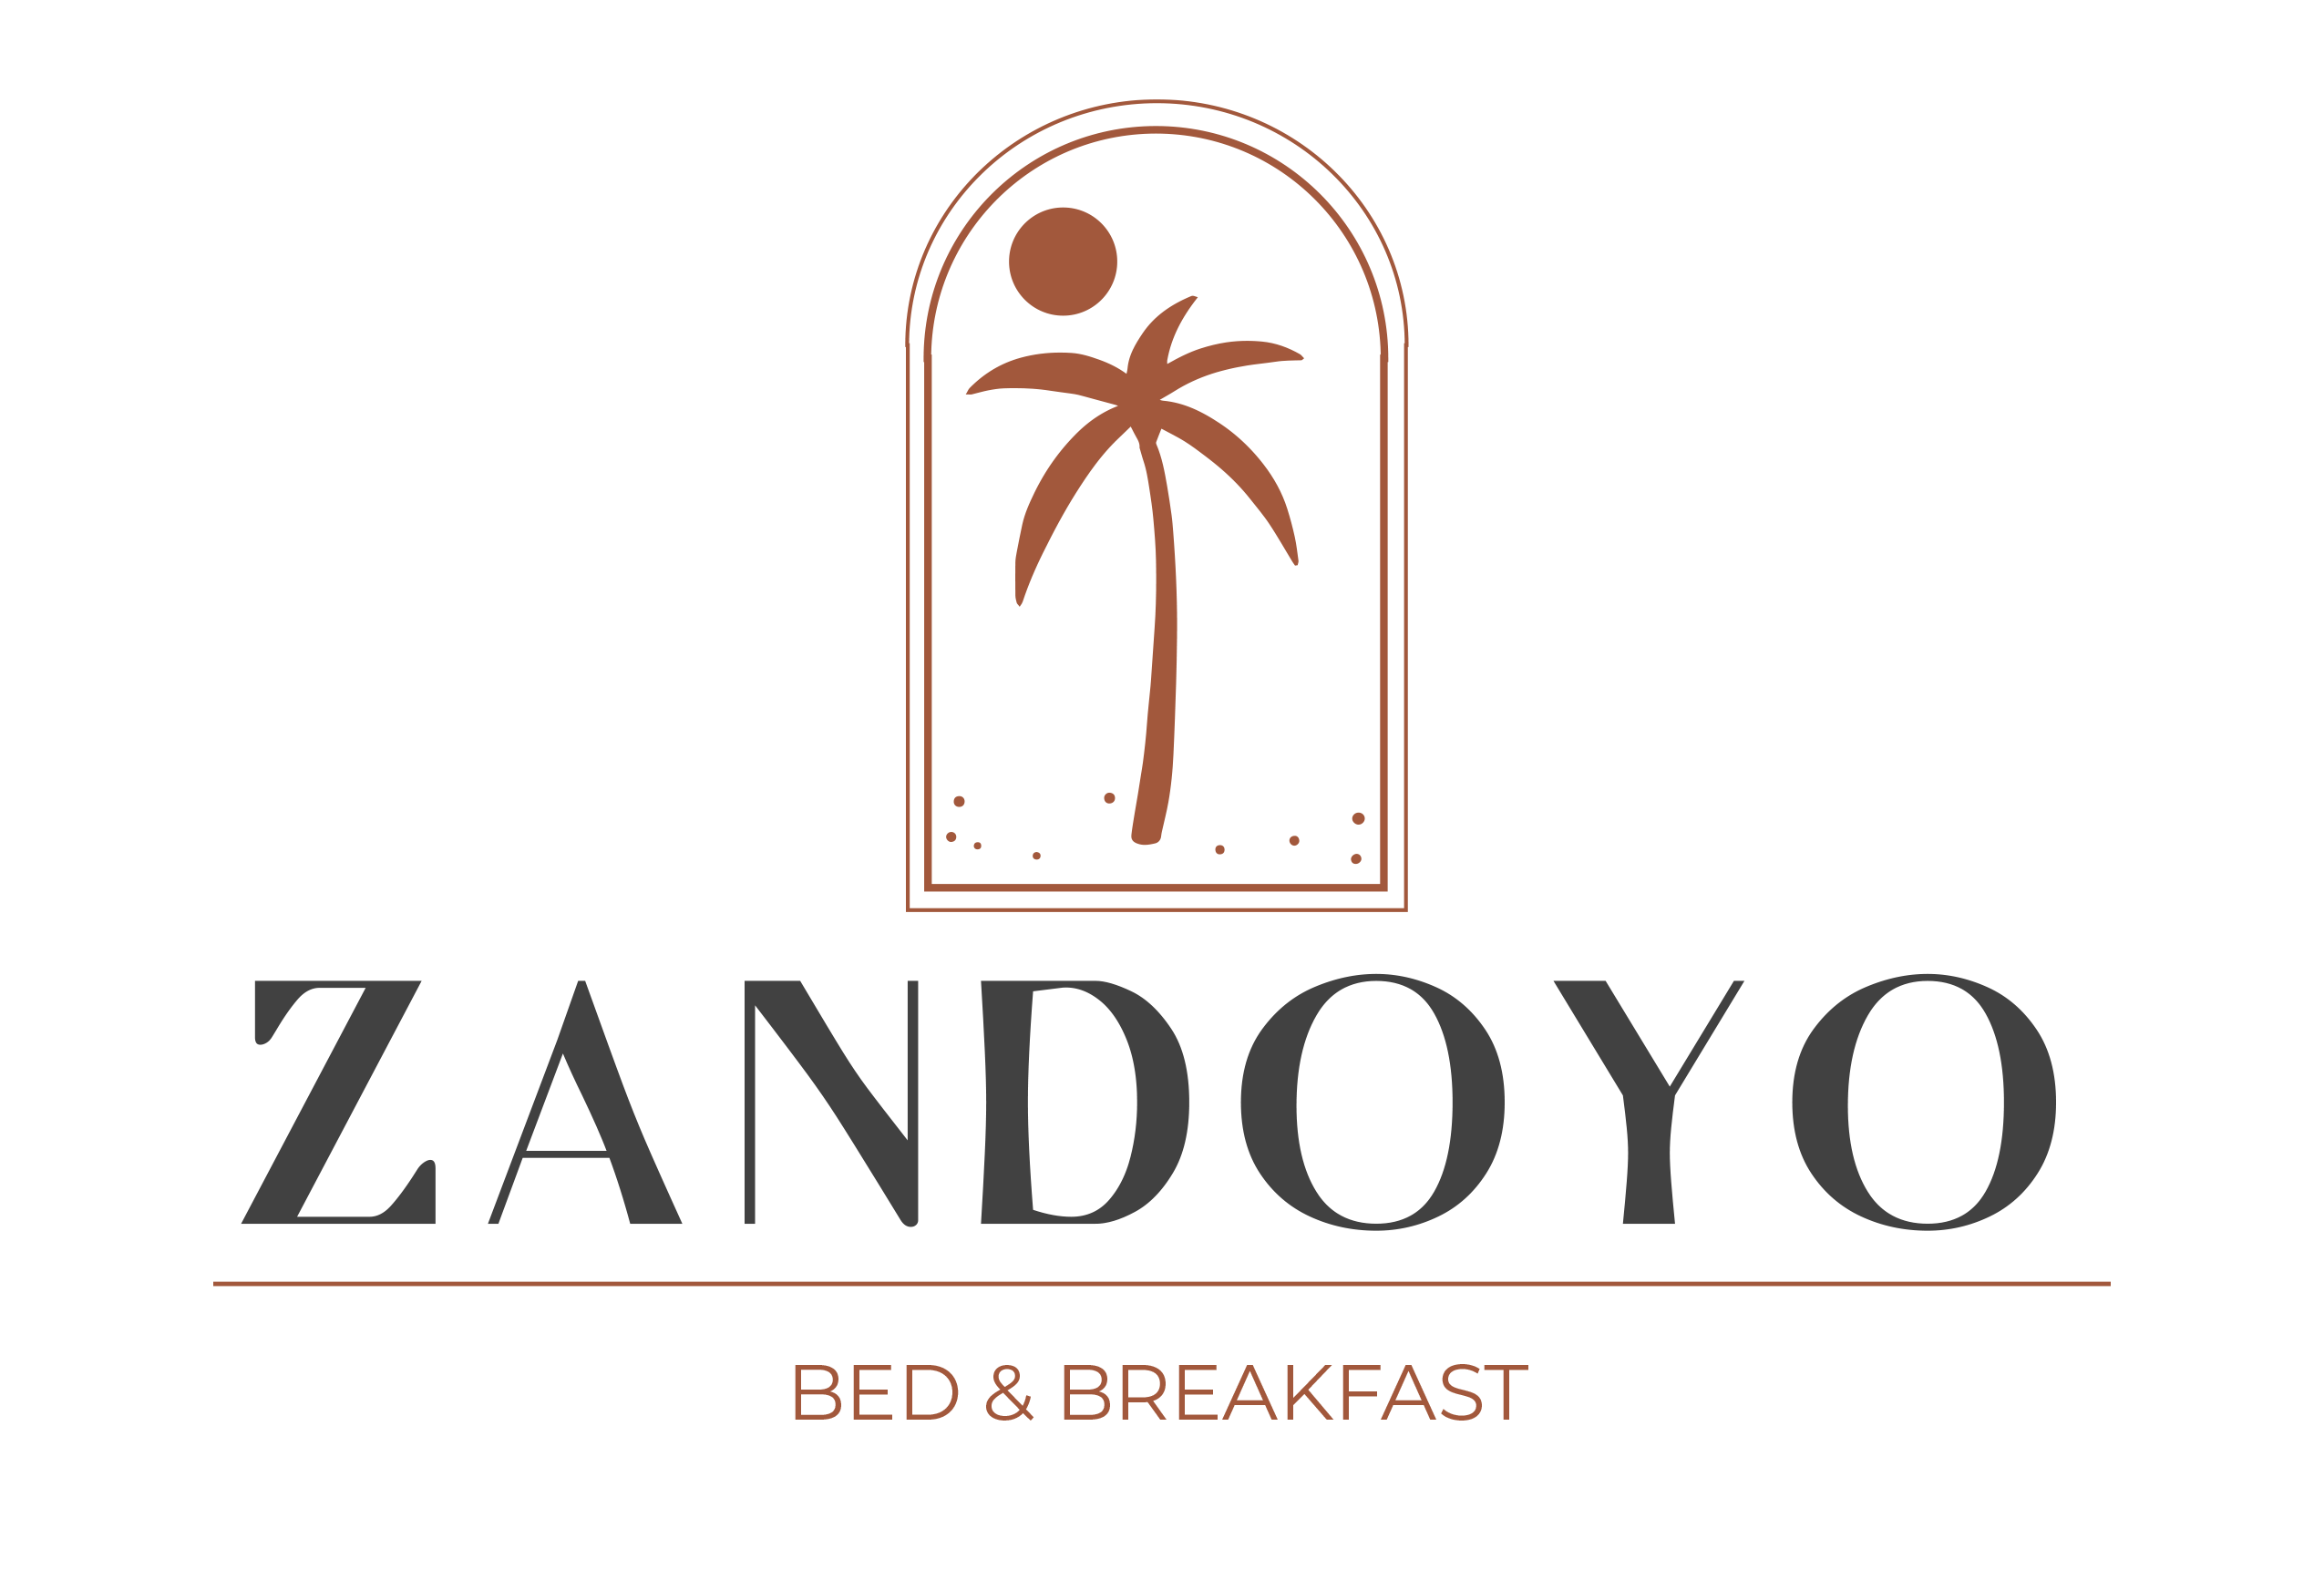 zandoyo bed & breakfast